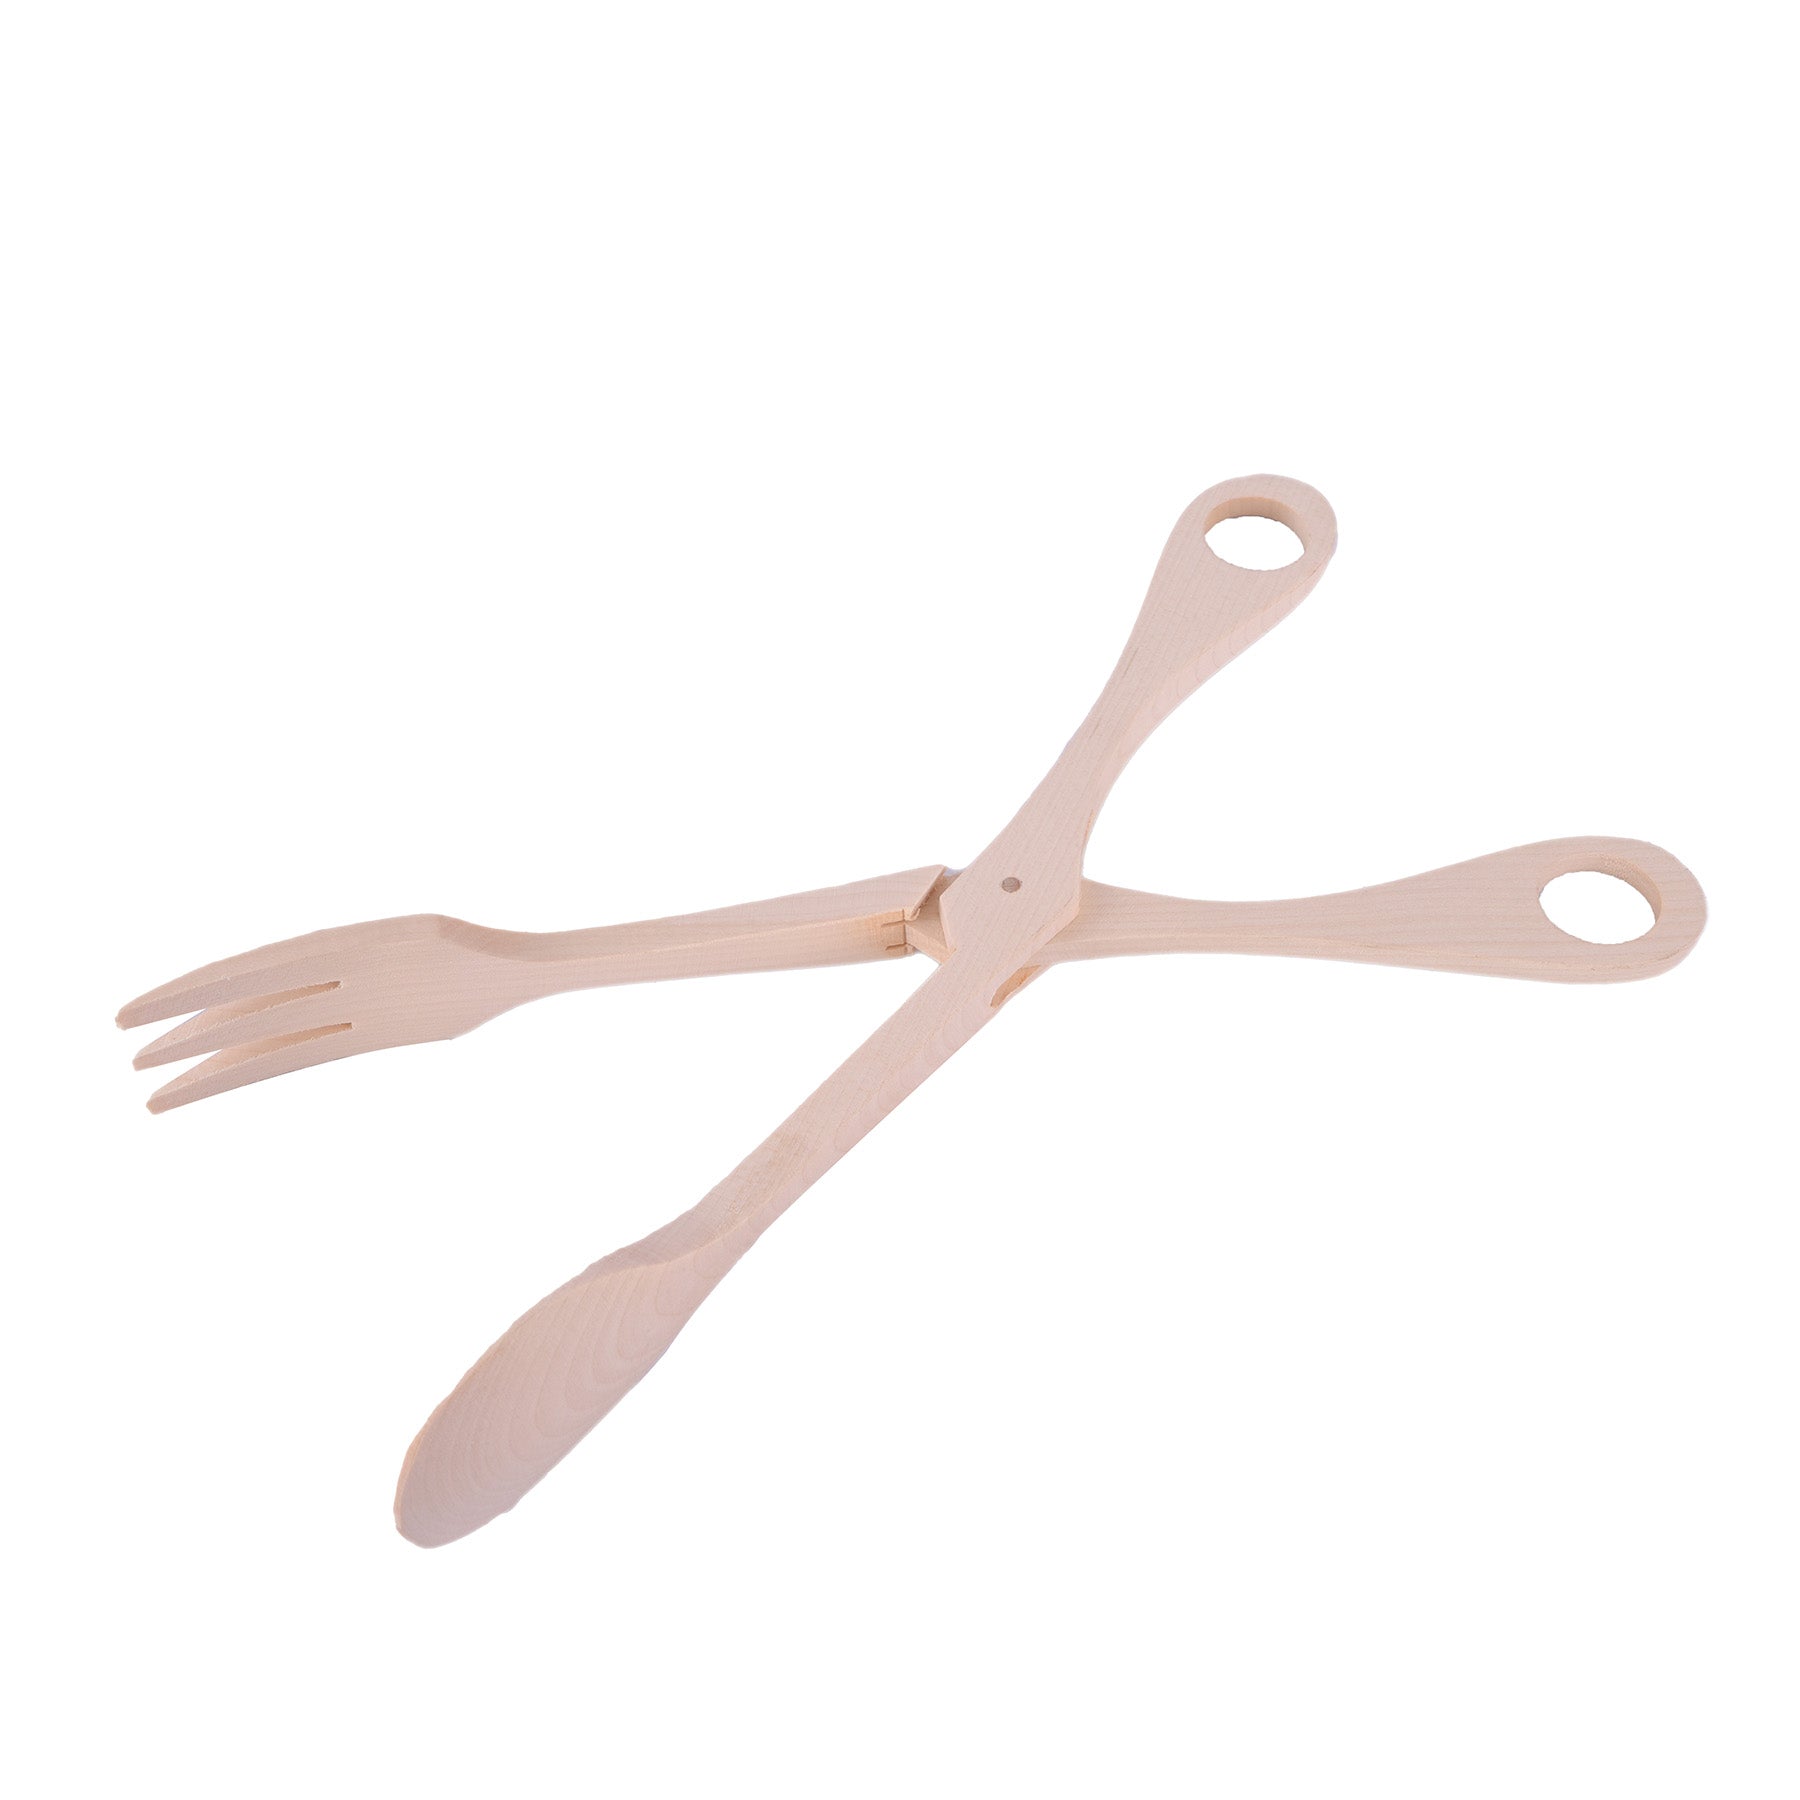 Wooden salad scissors, NaturalSize: 27 cm